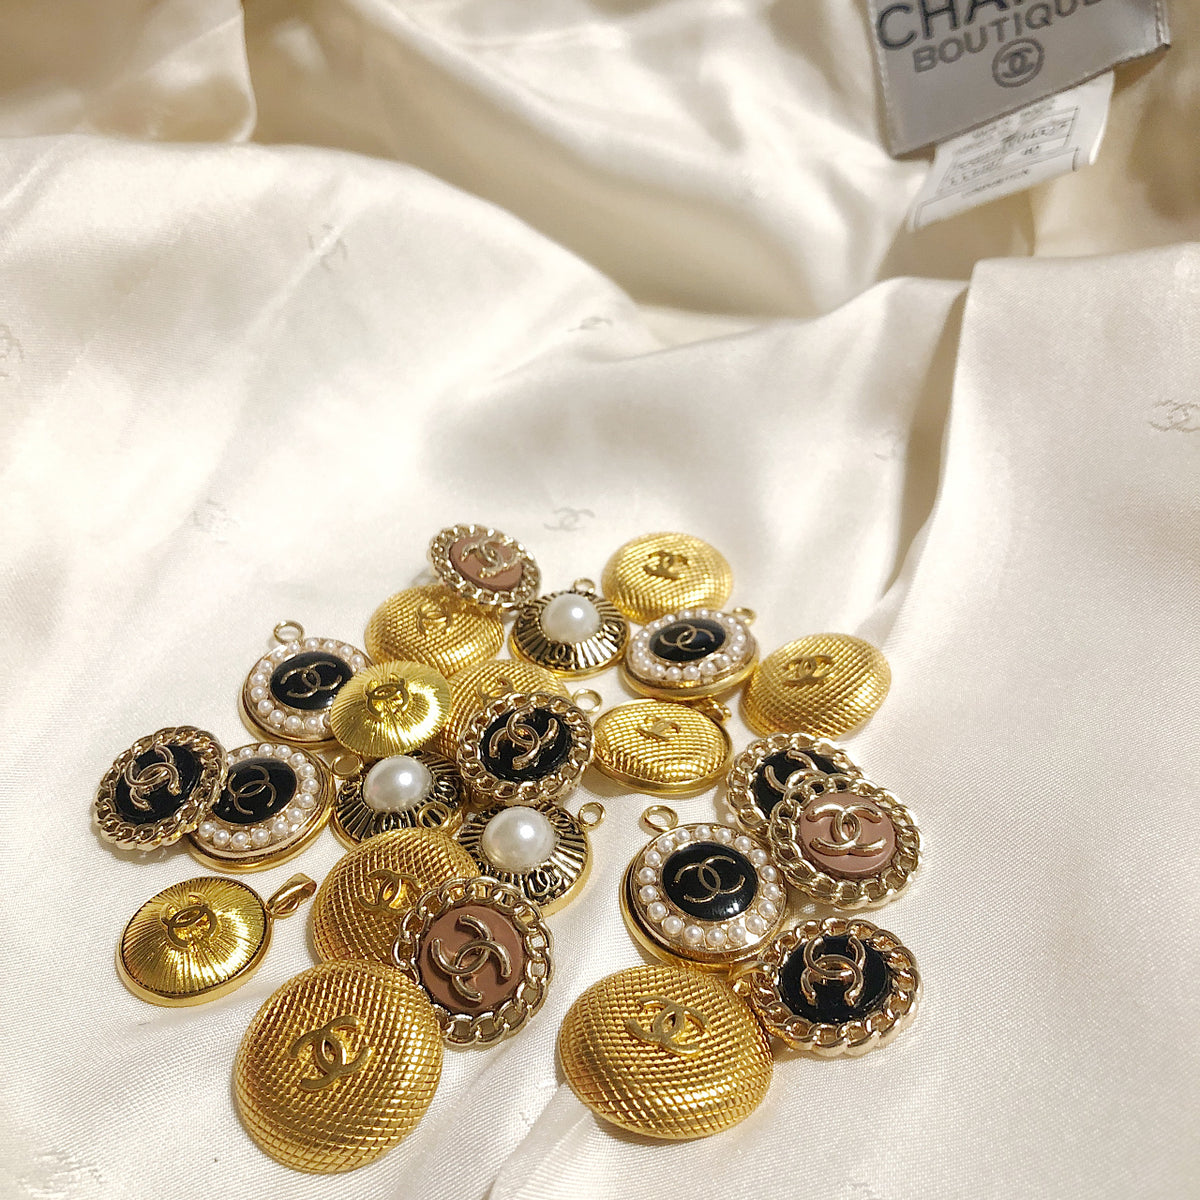 Best Deals for Chanel Button Necklace